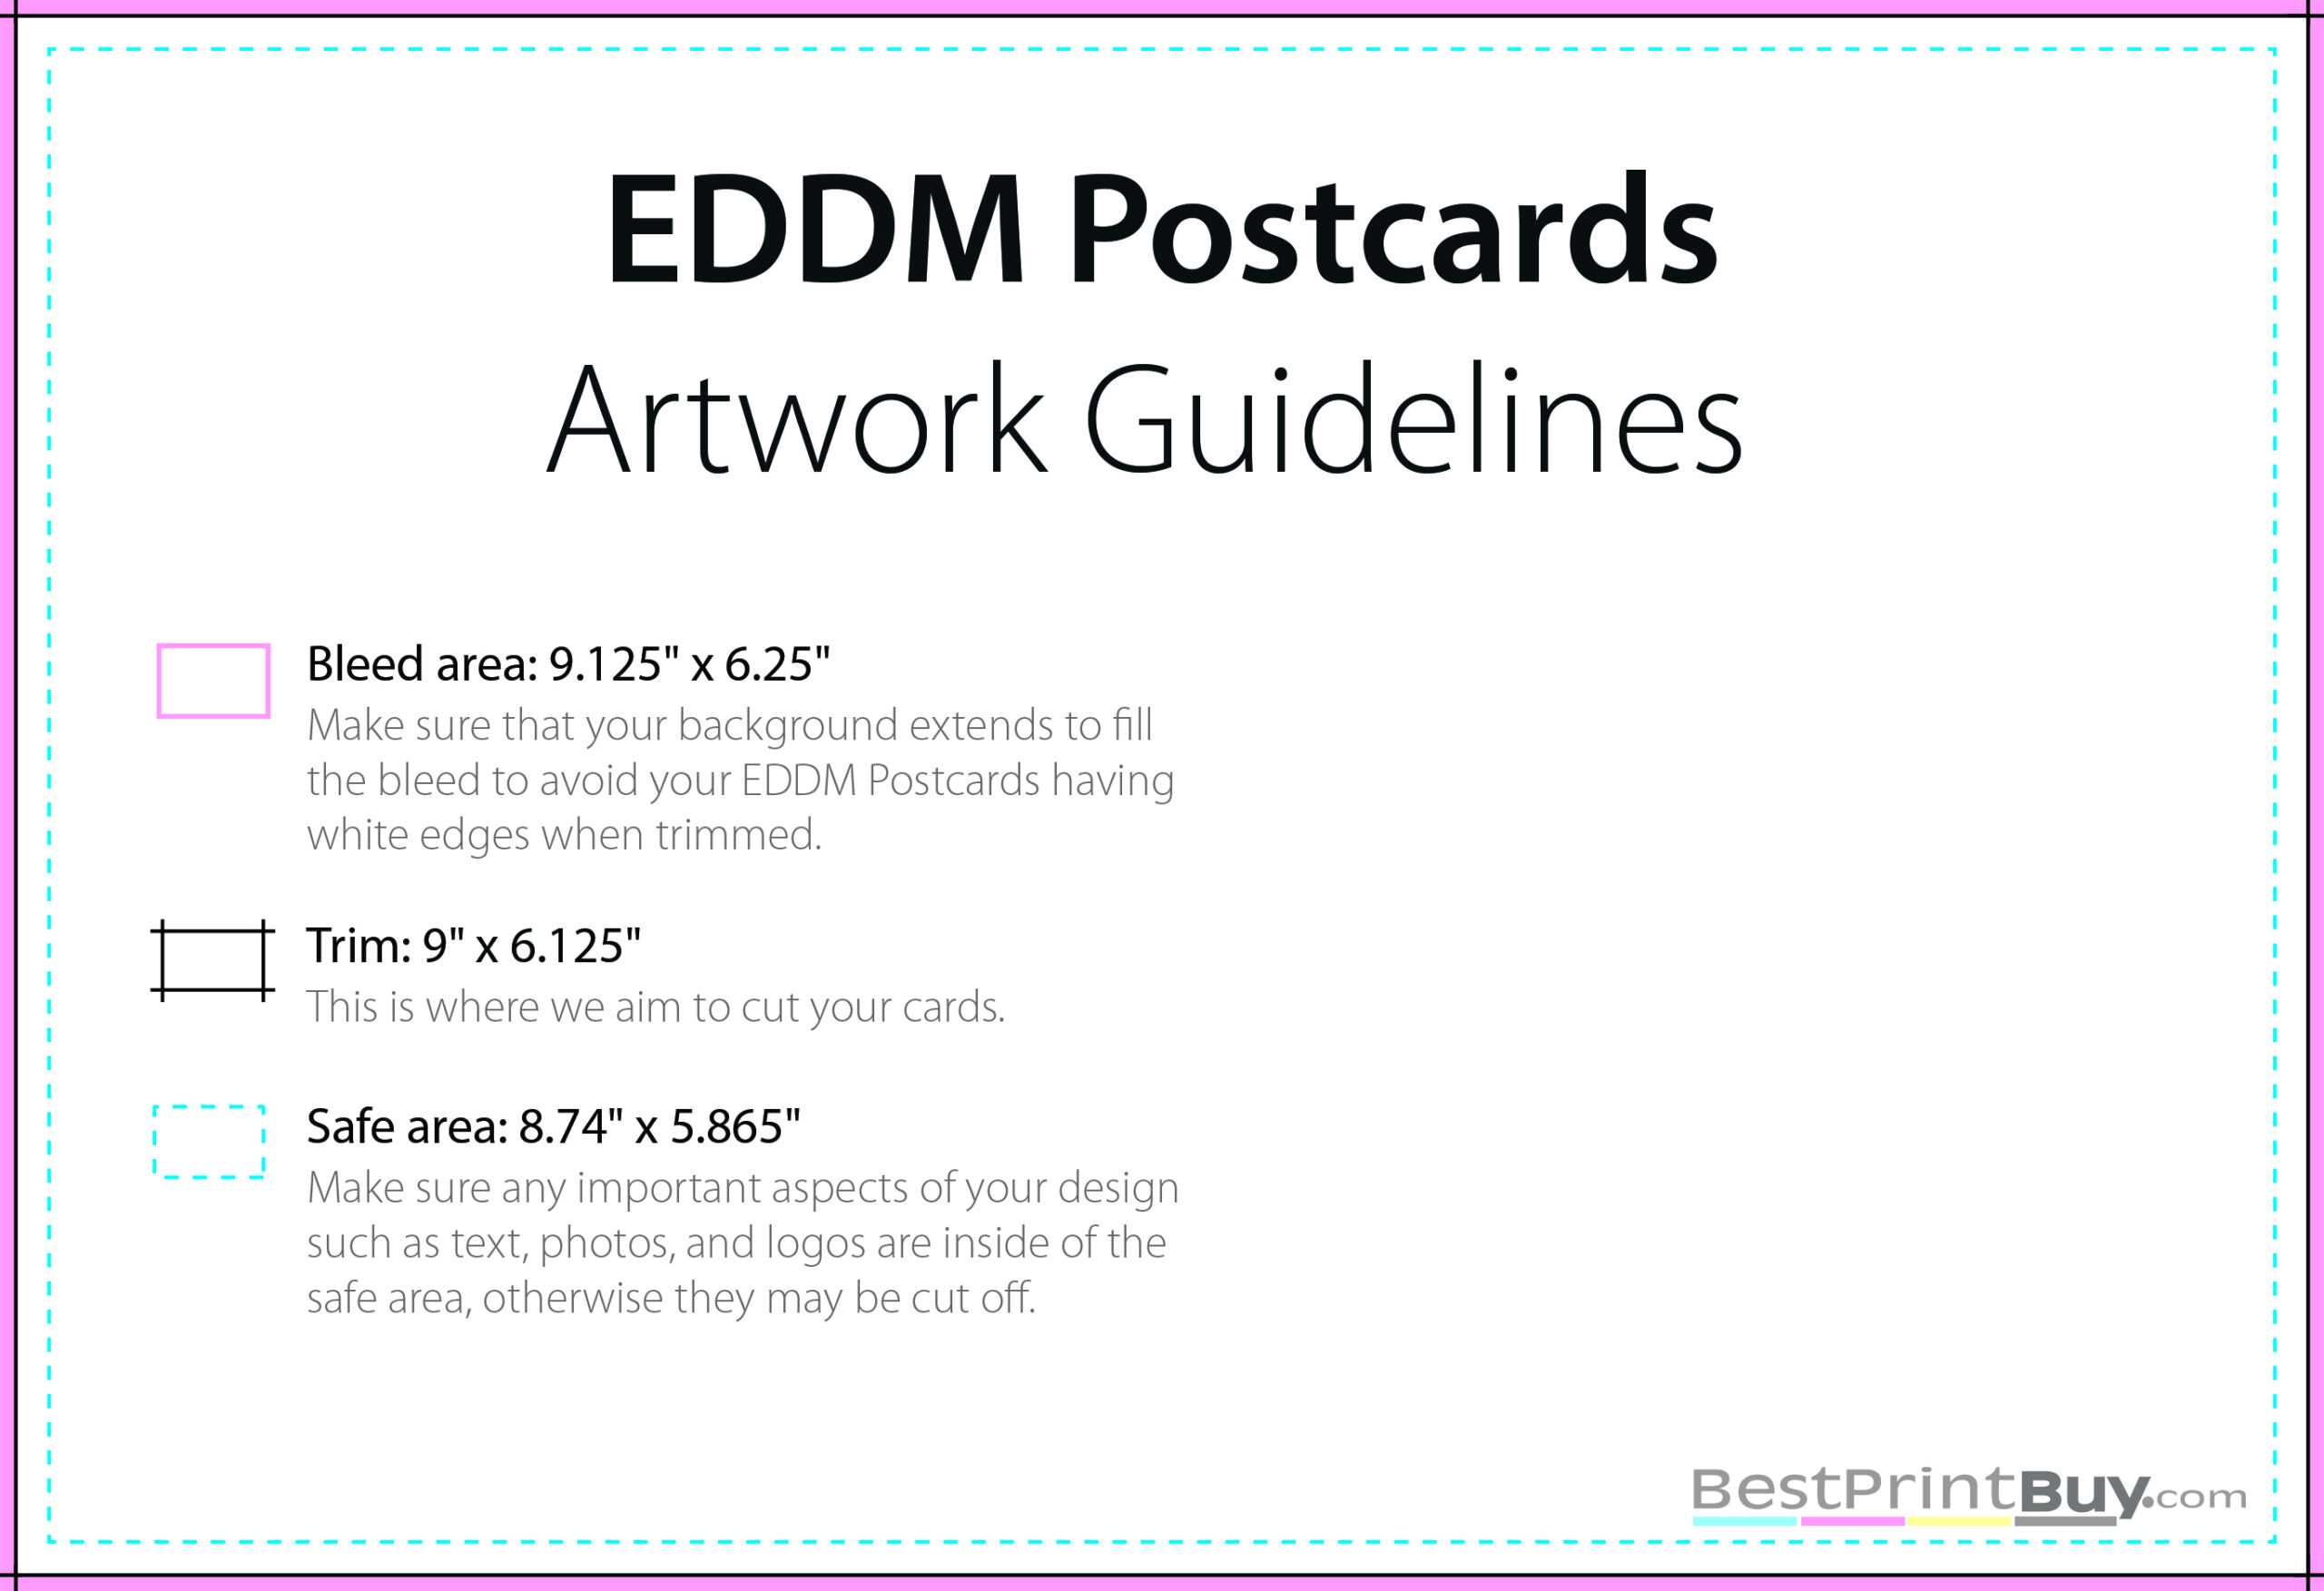 Re/max Real Estate Eddm Postcard Products Pertaining To Eddm Postcard Template